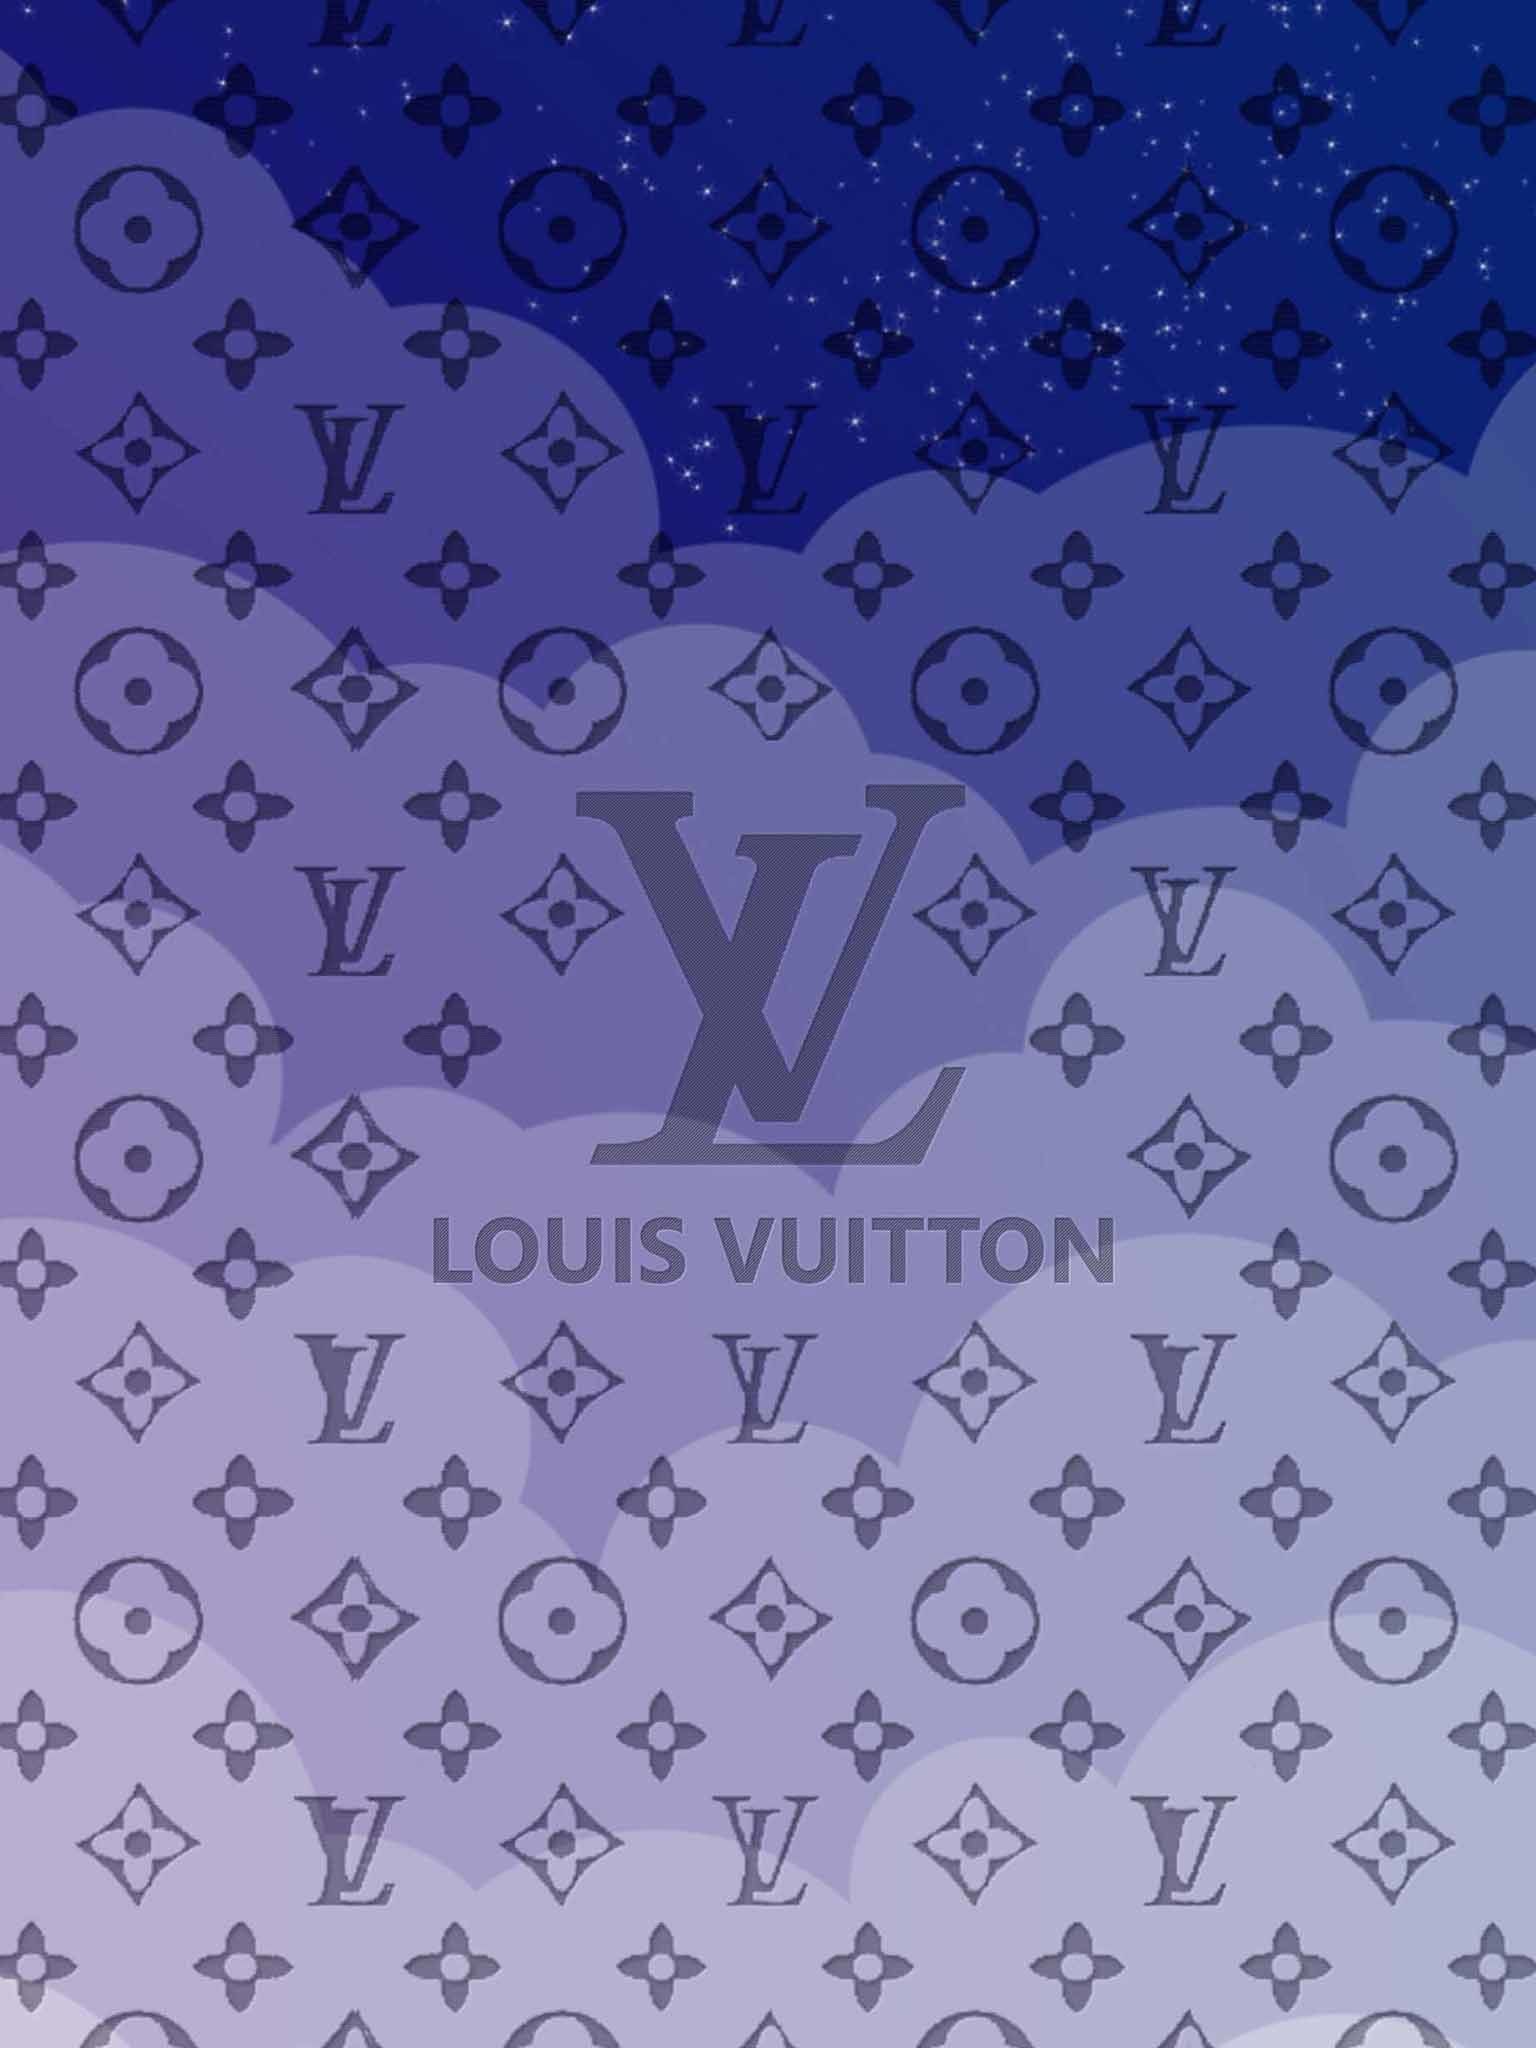 LV Wallpaper. Louis vuitton iphone wallpaper, Louis